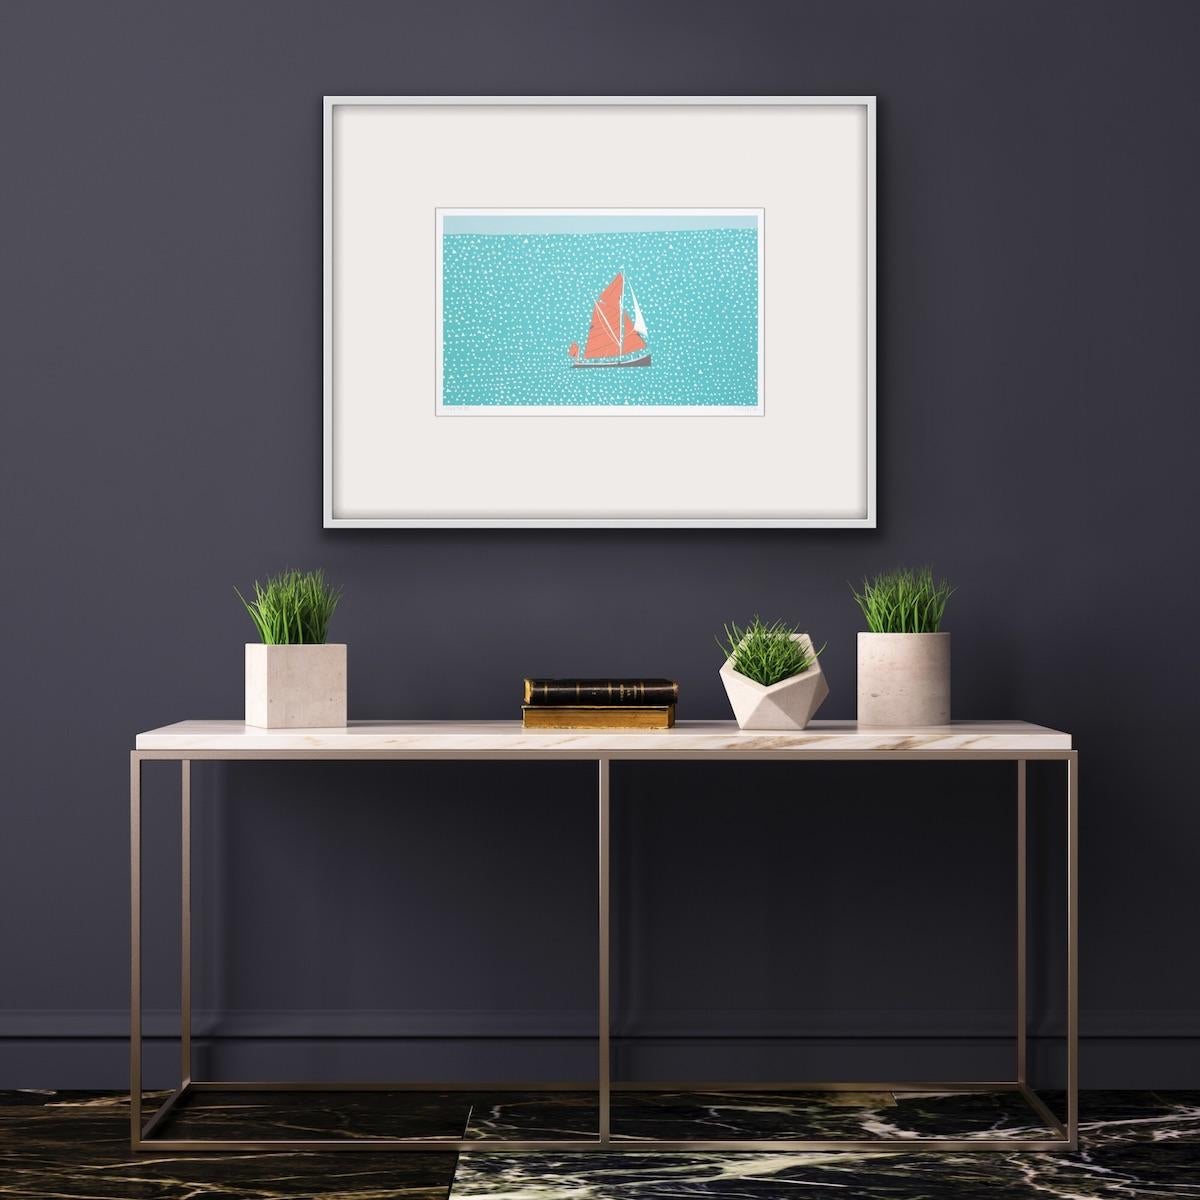 Greta 3, Simon Tozer, Limited edition print, Screen Print, Sailing art For Sale 5